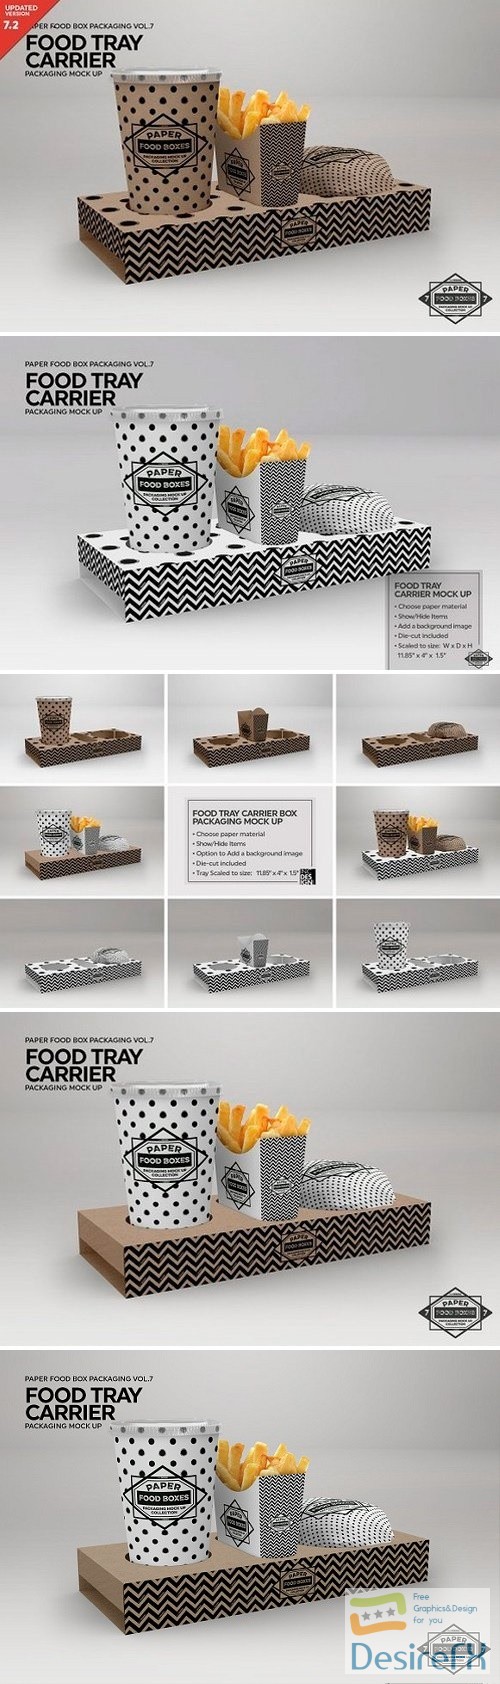 Download Desirefx.com | Download Food Tray Carrier Packaging Mockup ...